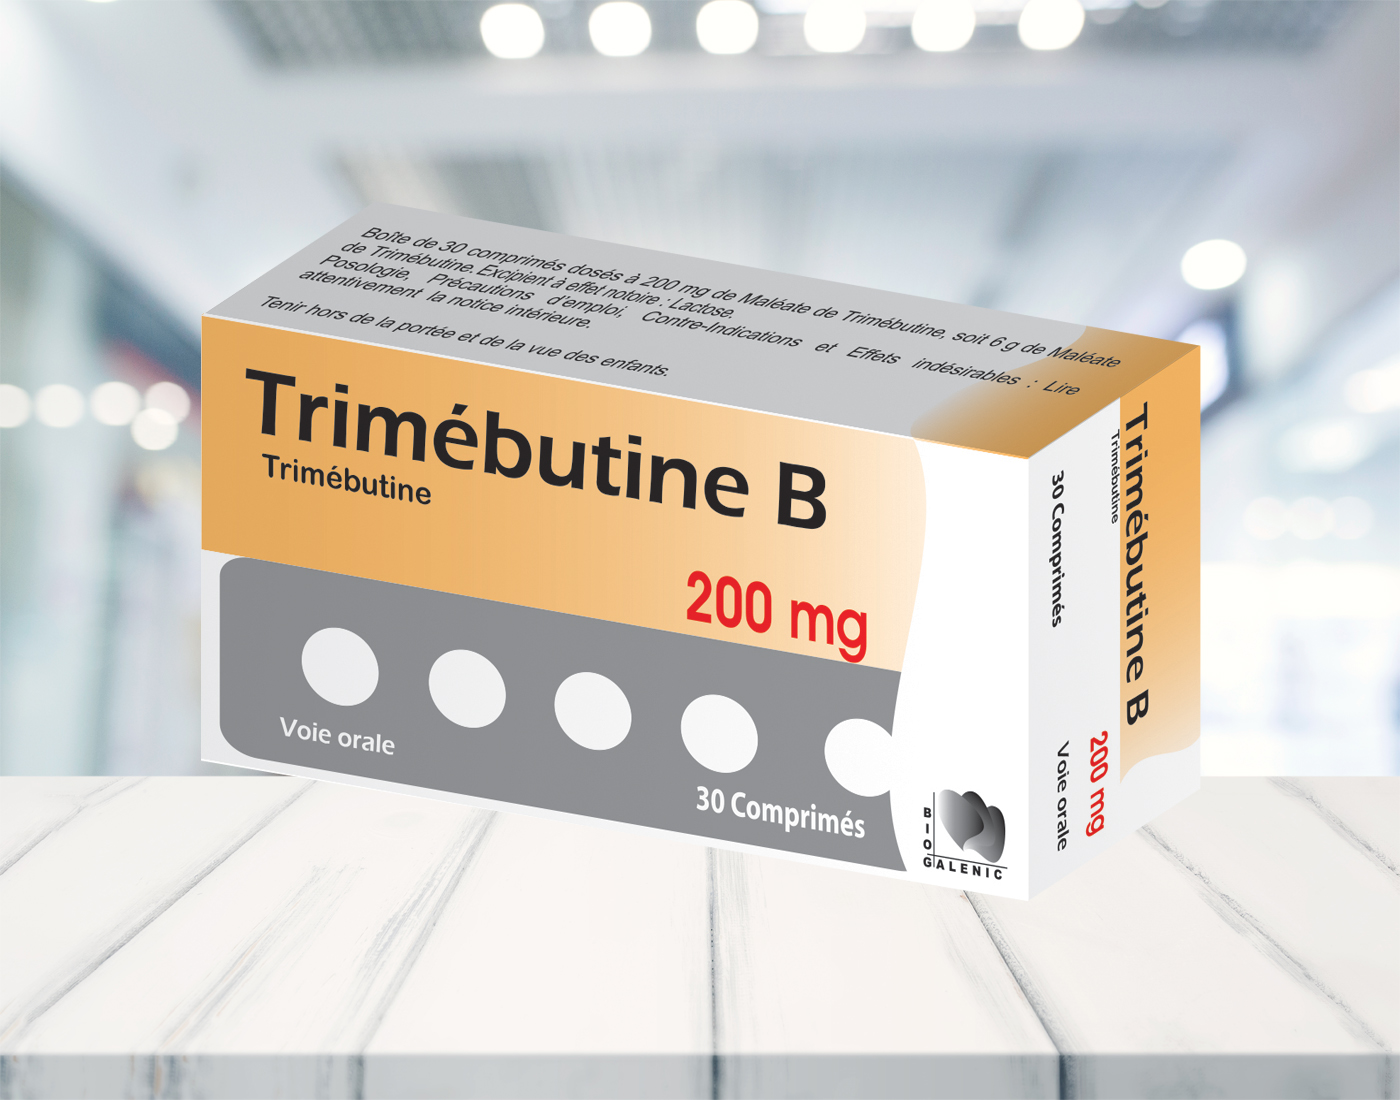 Trimebutine B 200mg – Biogalenicpharma